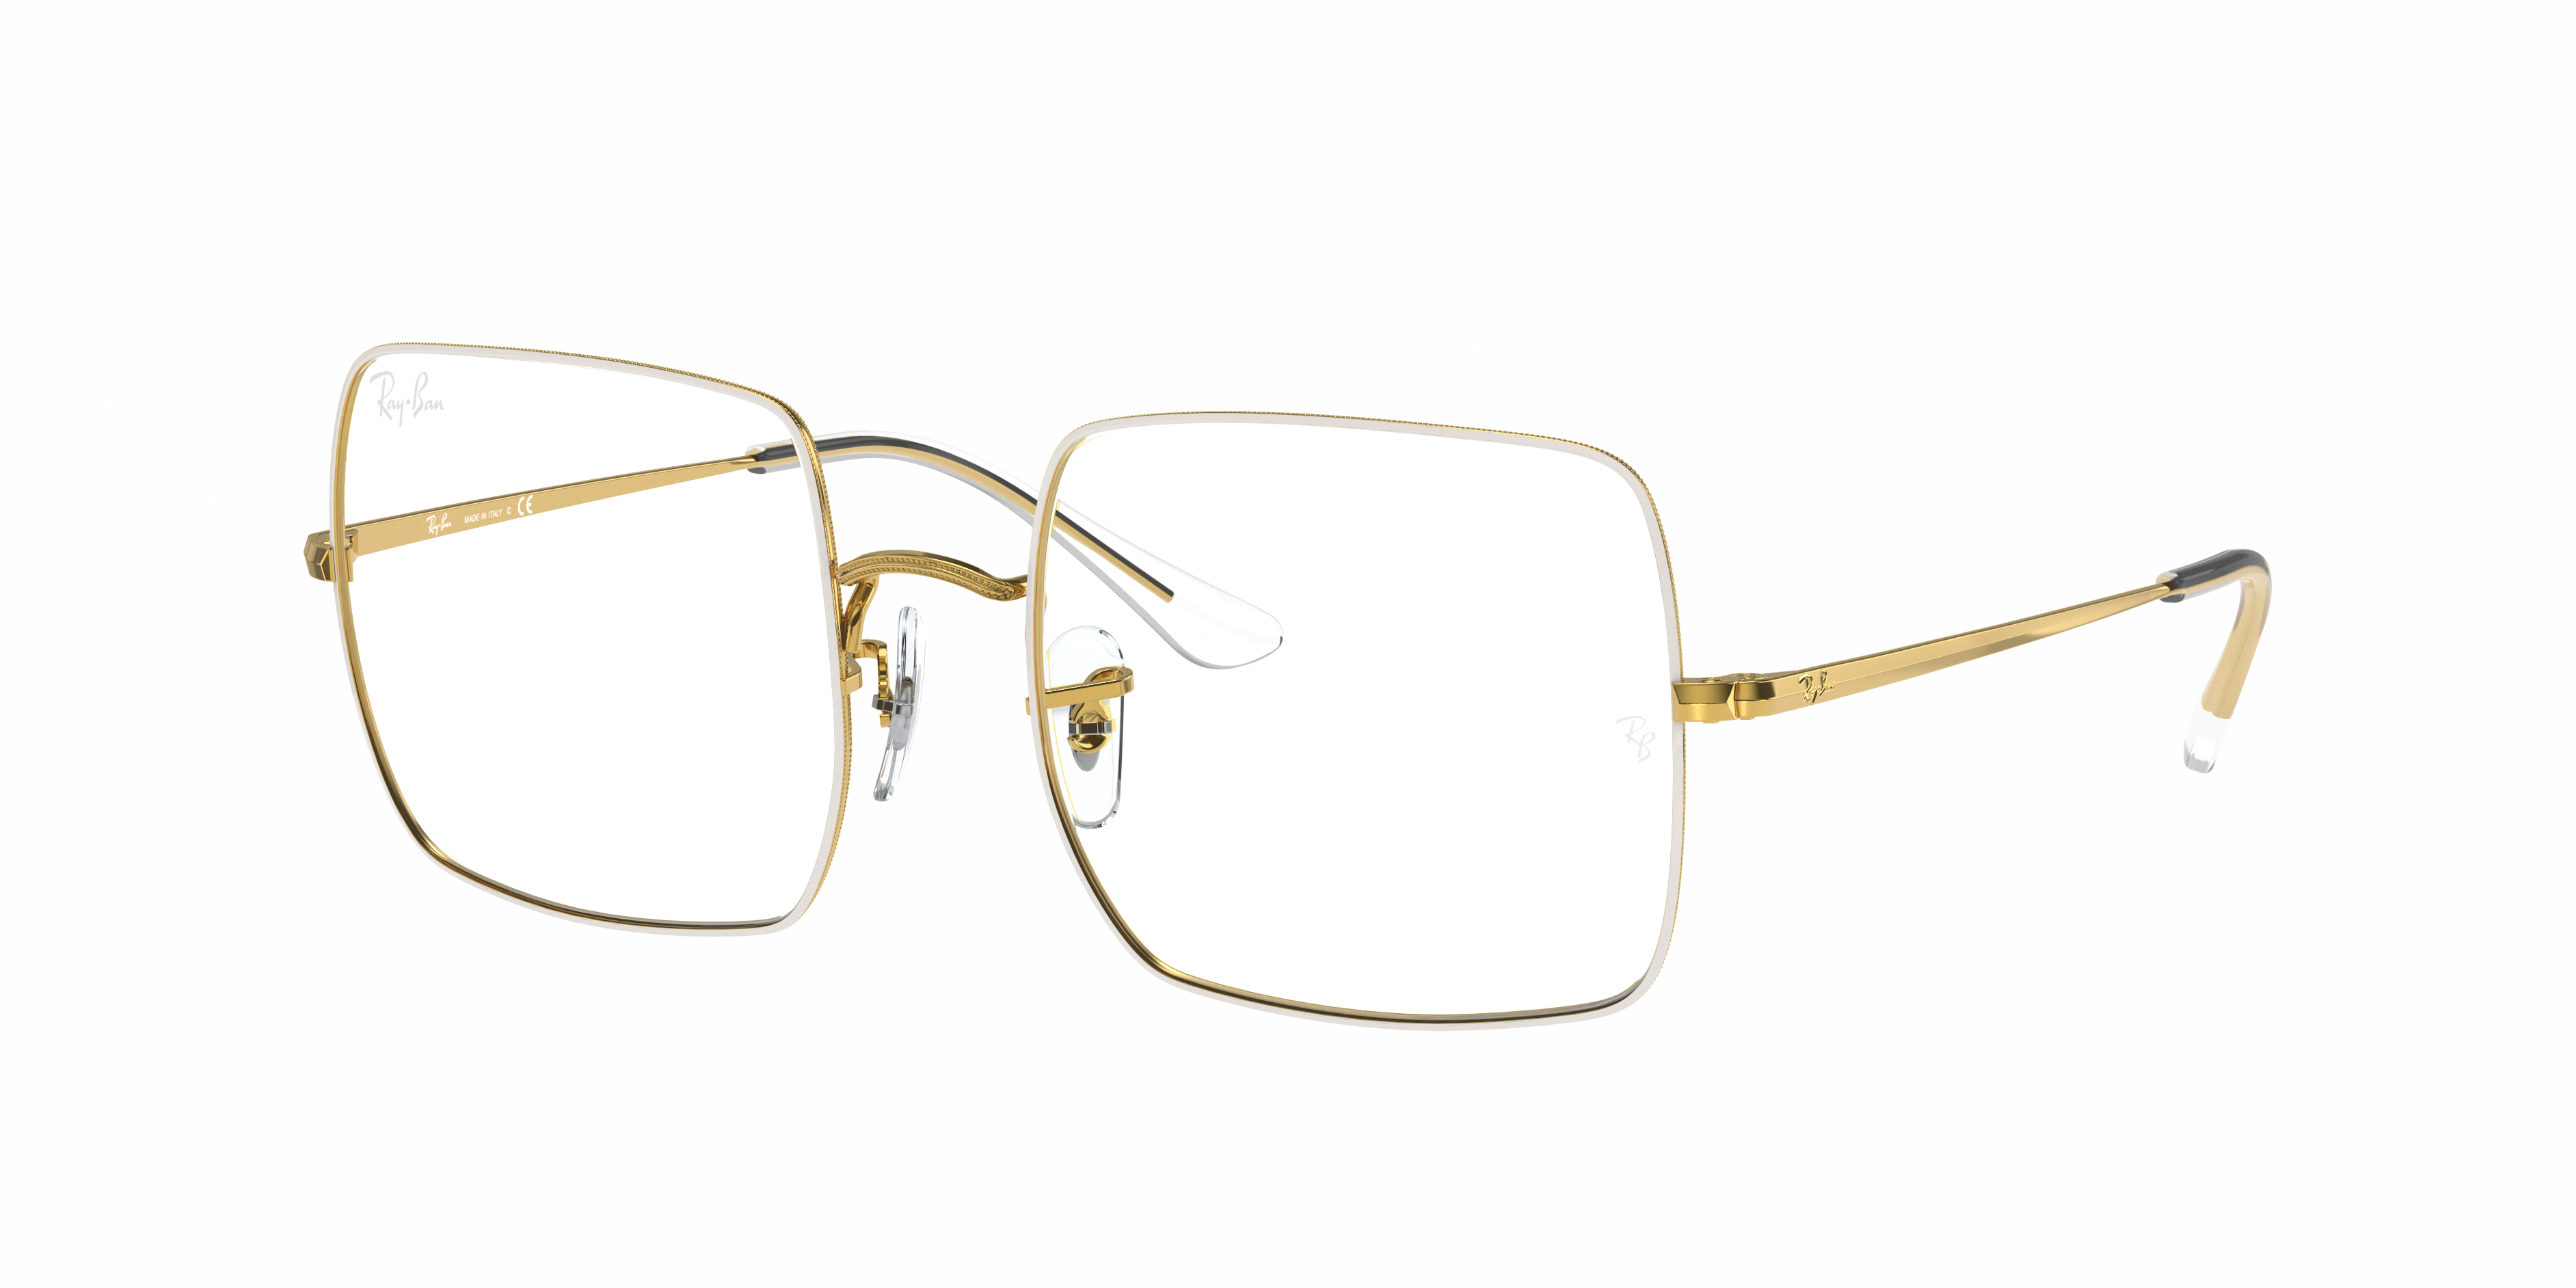 Square 1971 Optics Eyeglasses with White Frame | Ray-Ban®